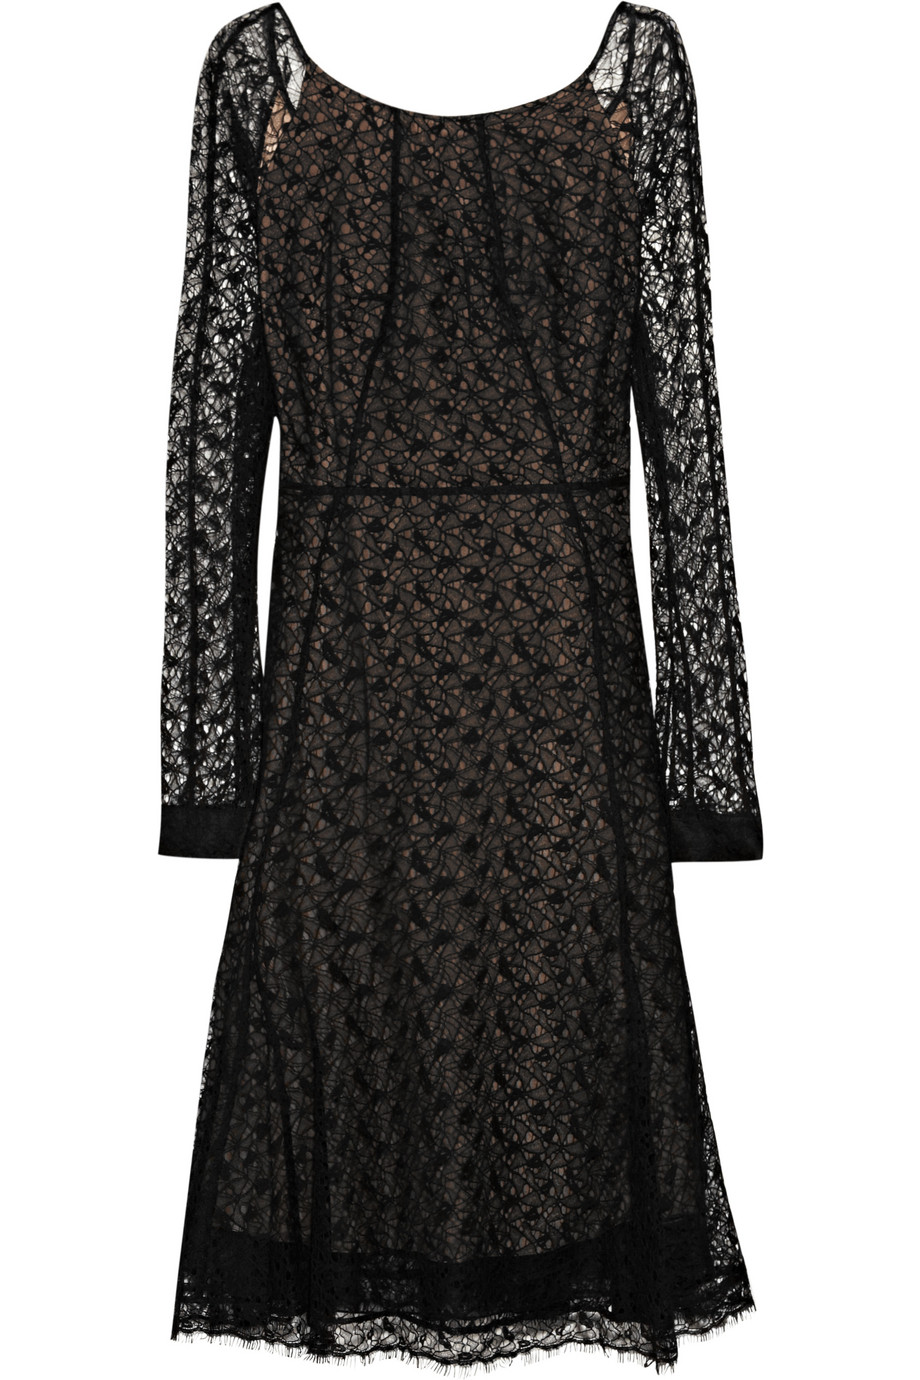 Lyst - Erdem Giselle Lace Dress in Black